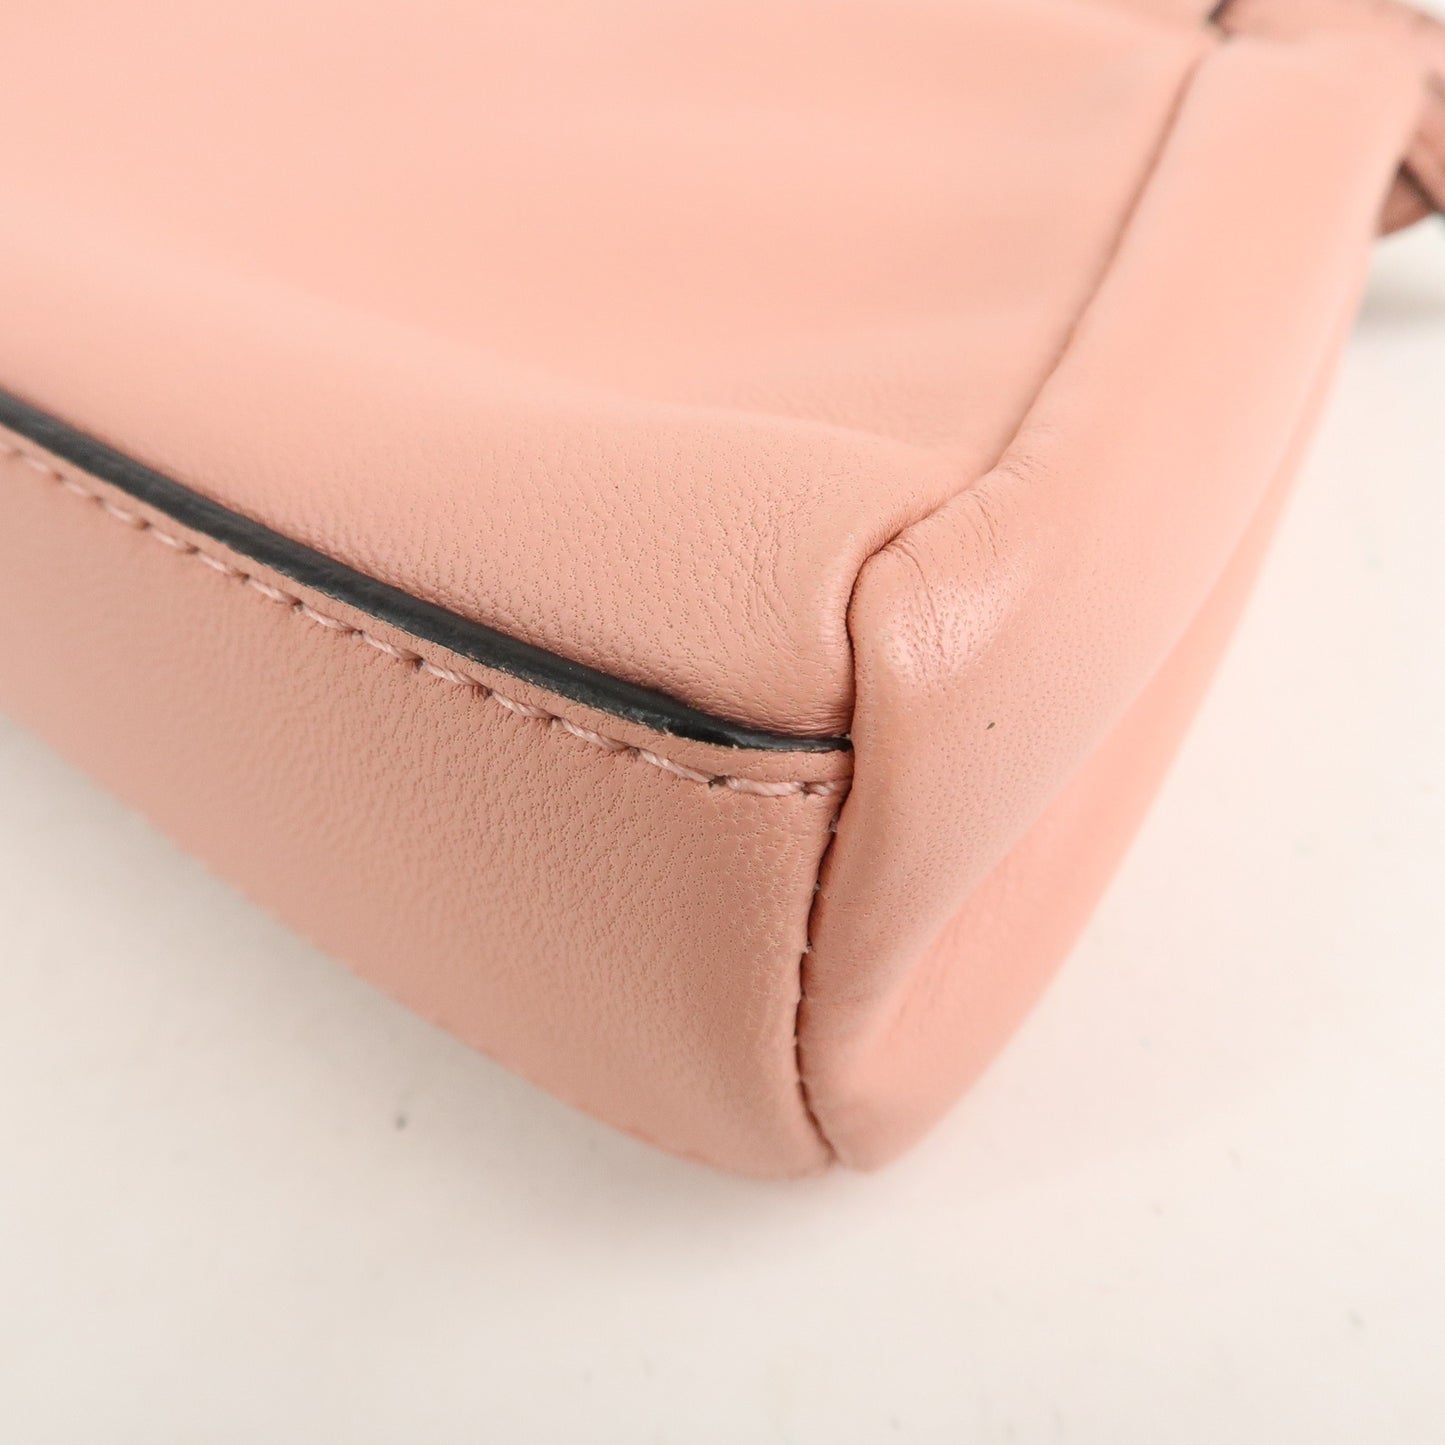 FENDI Micro Peekaboo Leather 2Way Bag Hand Bag Pink 8M0355